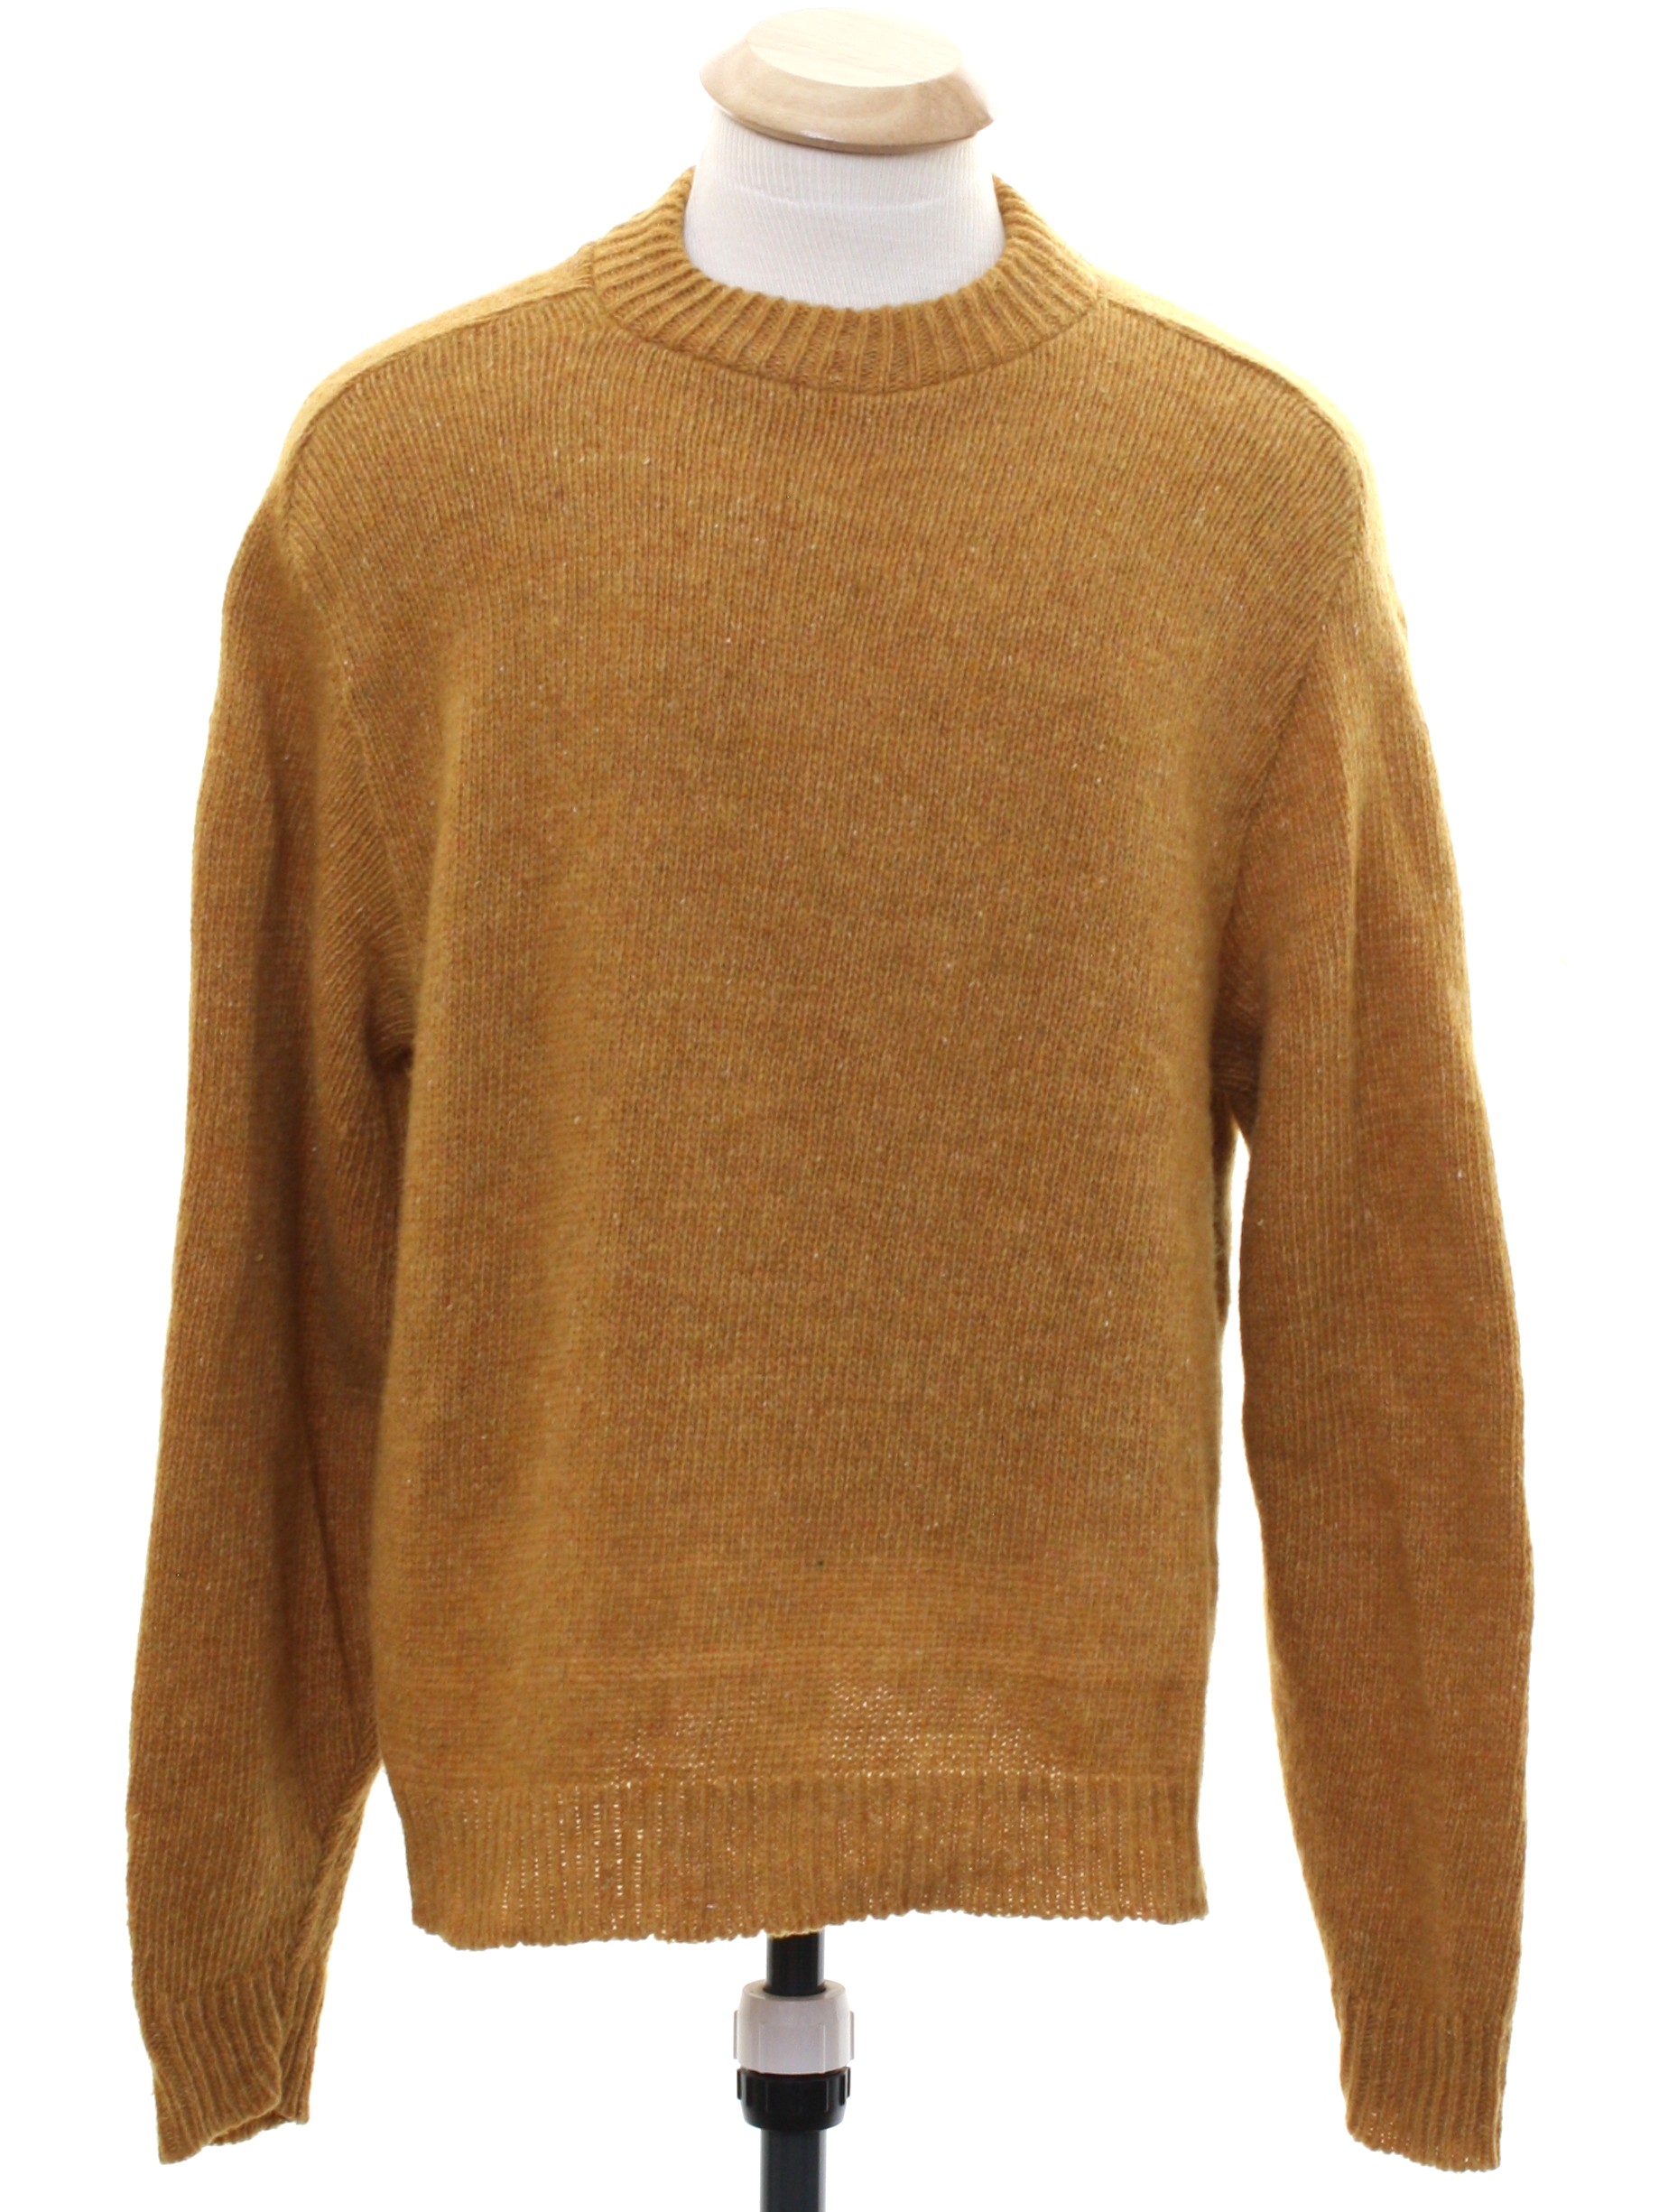 Vintage 60s Sweater: Early 60s -Dagar- Unisex mottled golden tan